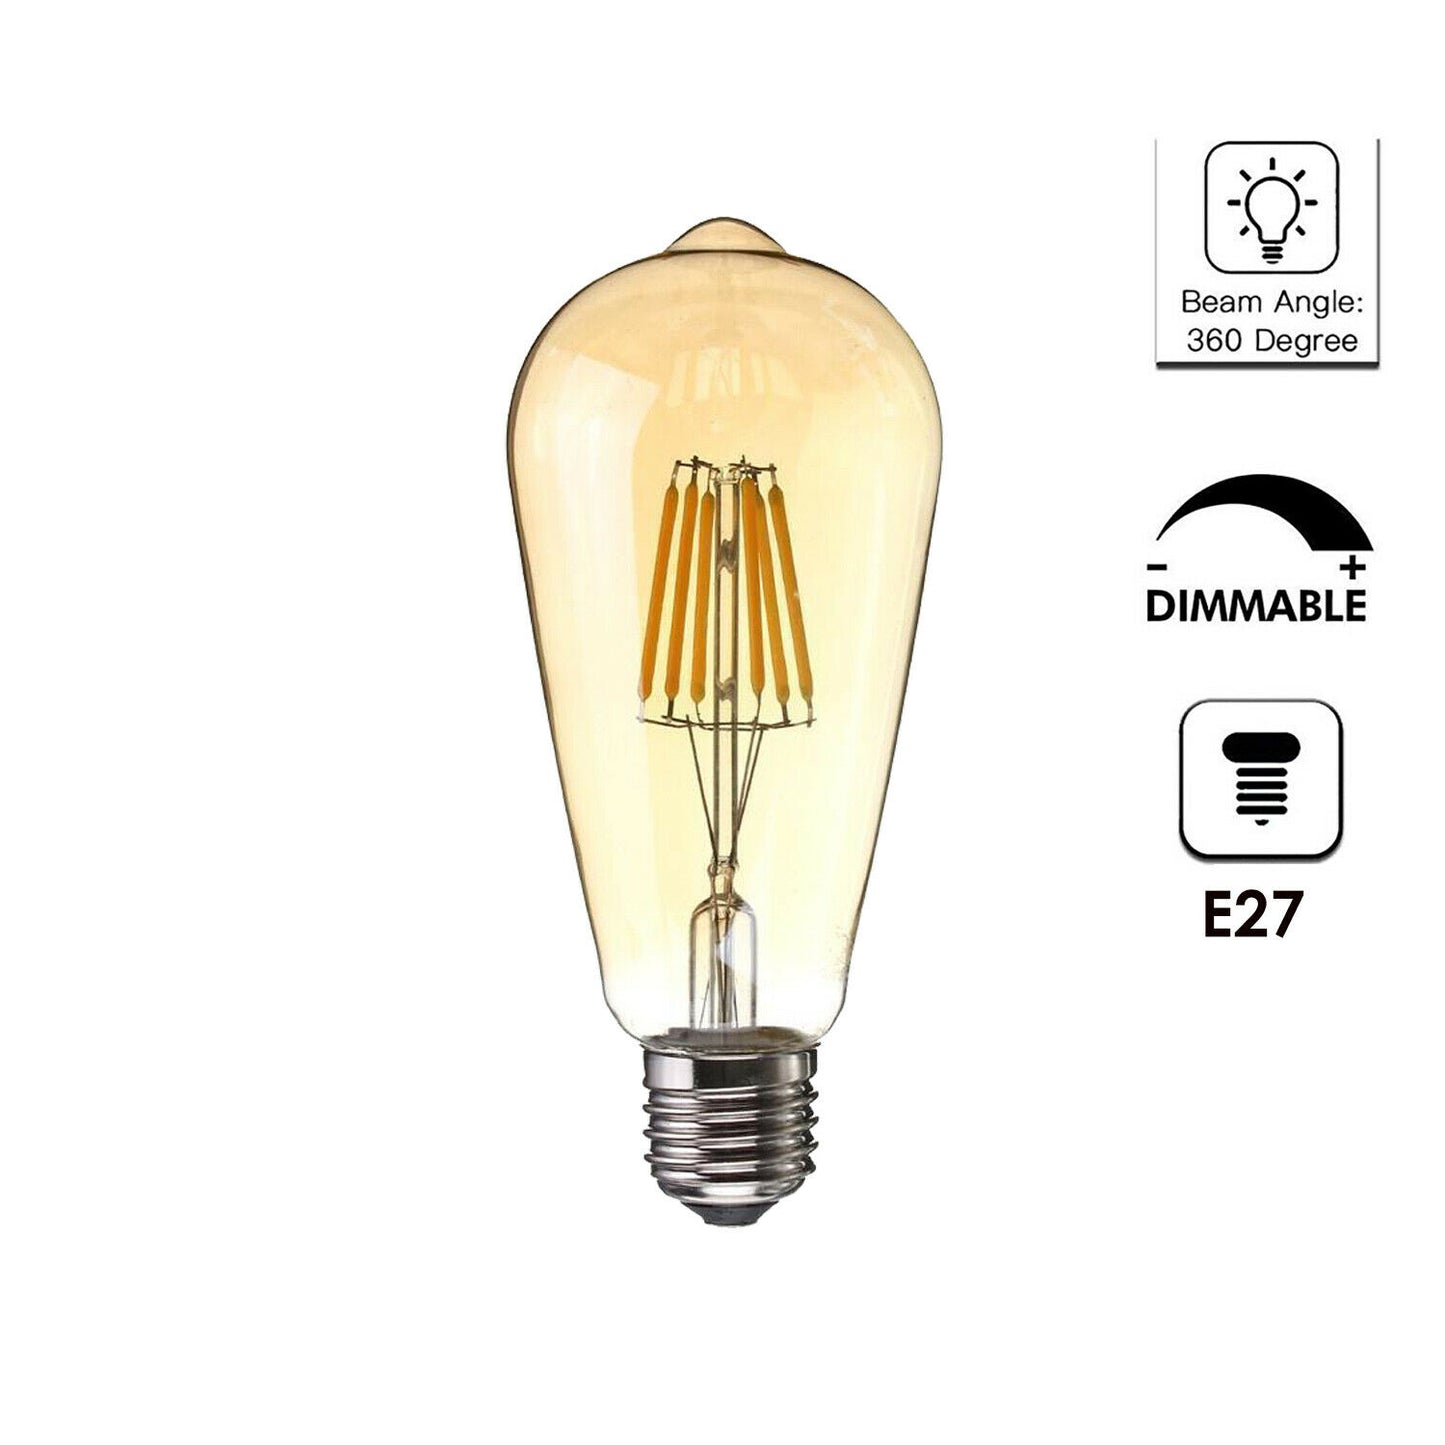 6 Pack Vintage E27 base Filament LED Edison Bulb Dimmable Decorative Industrial Light - Vintagelite